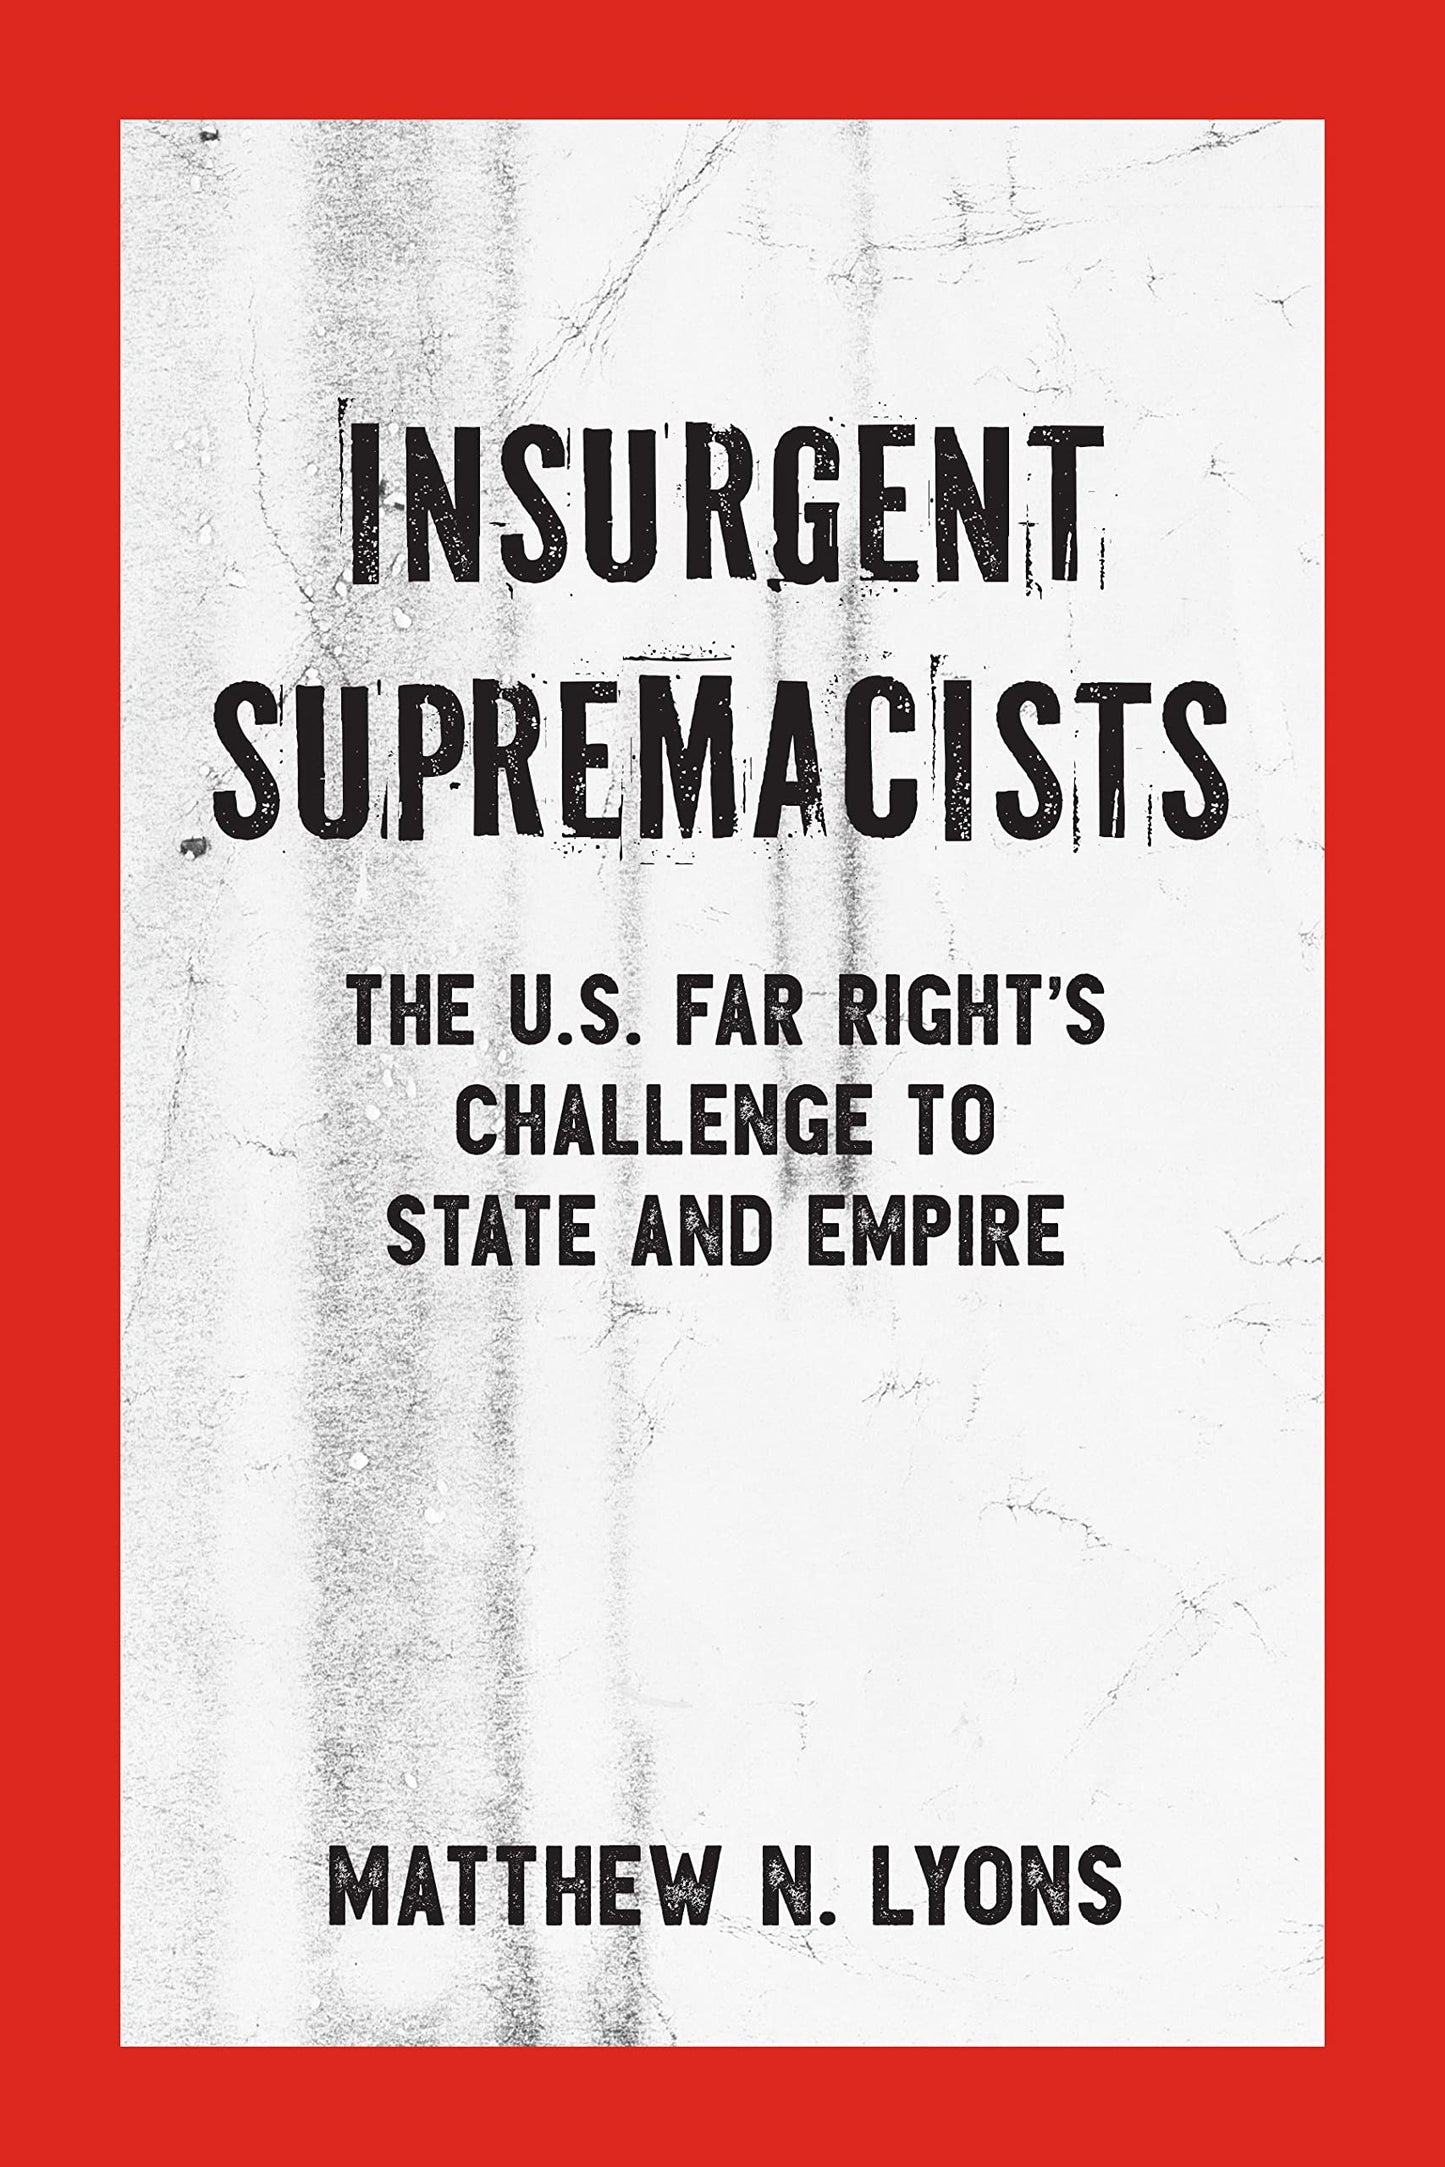 Insurgent Supremacists, by Matthew N. Lyons